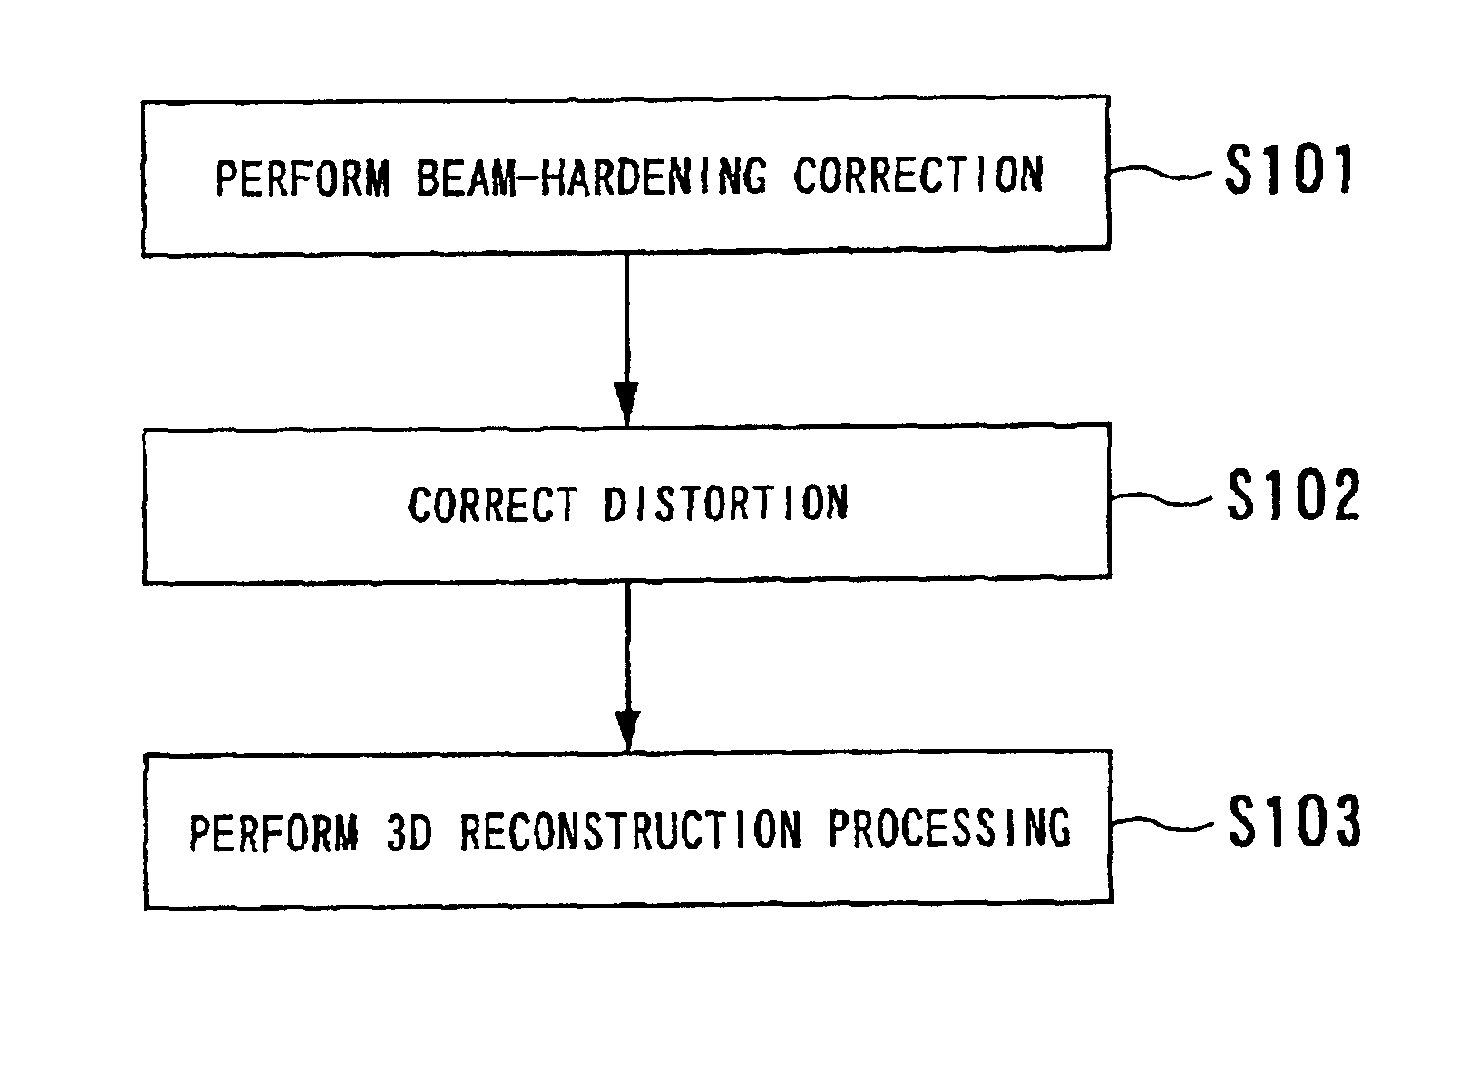 Image processing involving correction of beam hardening